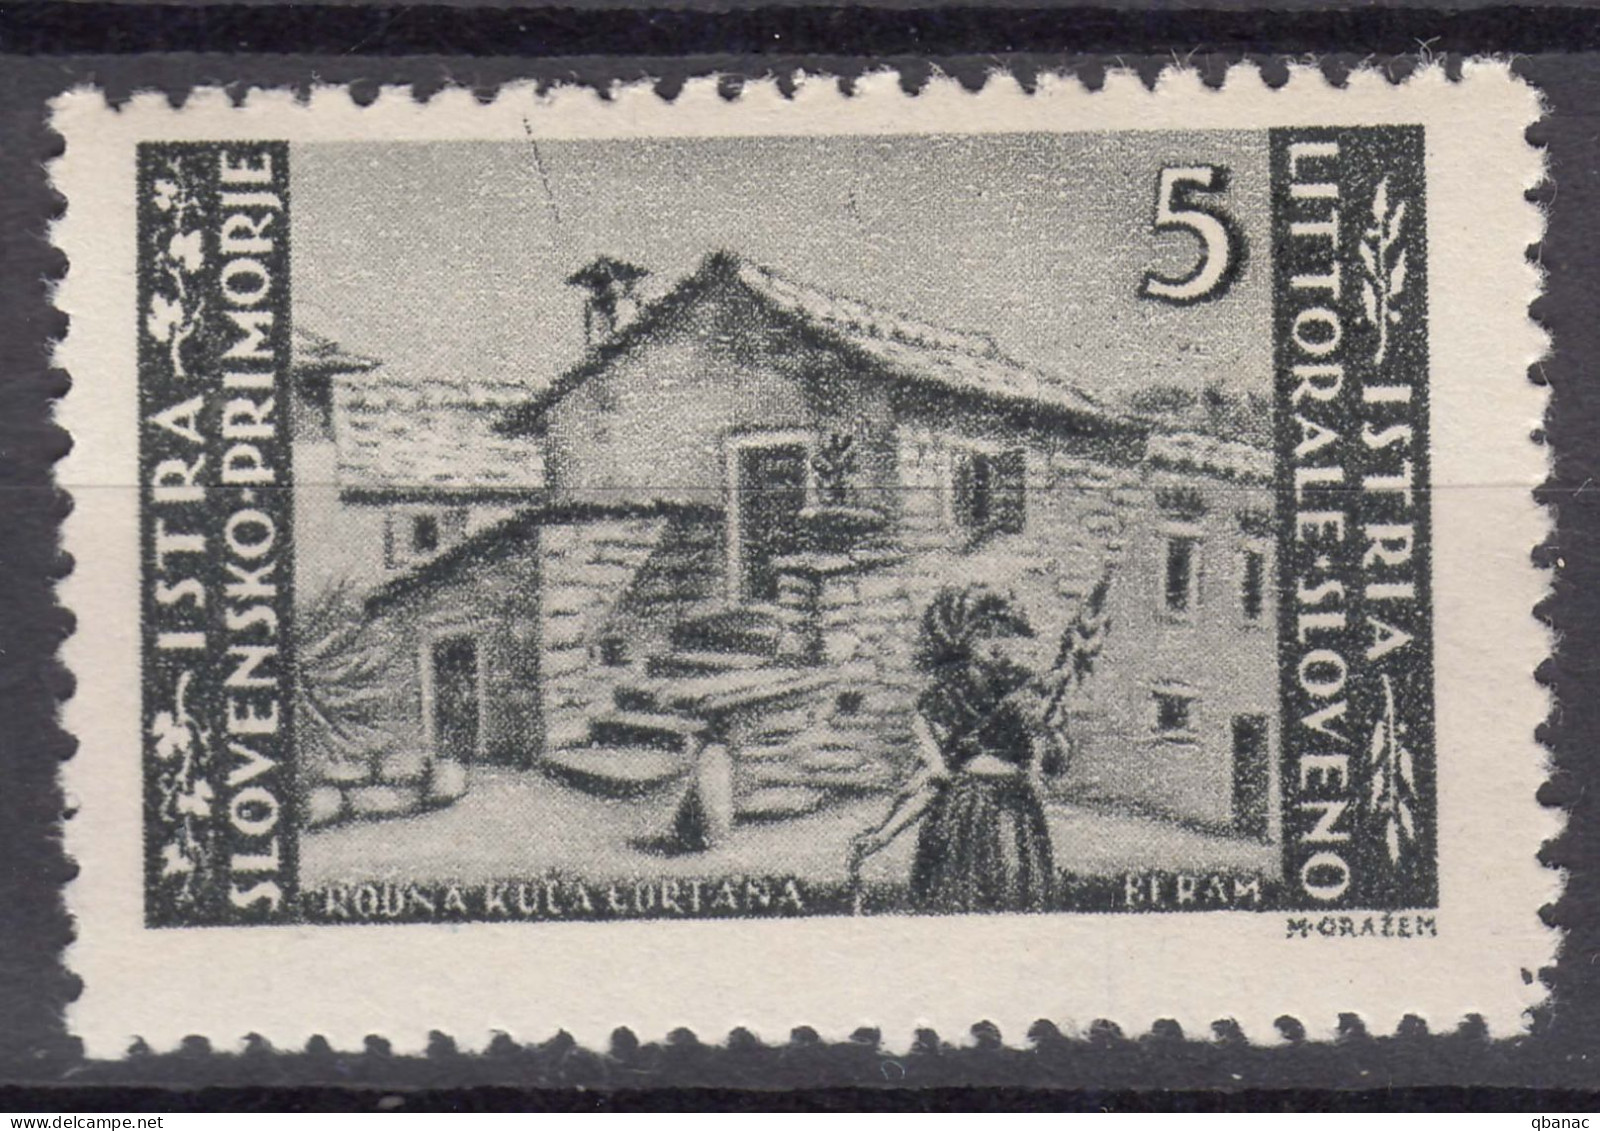 Istria Litorale Yugoslavia Occupation, 1946 Sassone#57 Mint Never Hinged - Ocu. Yugoslava: Istria